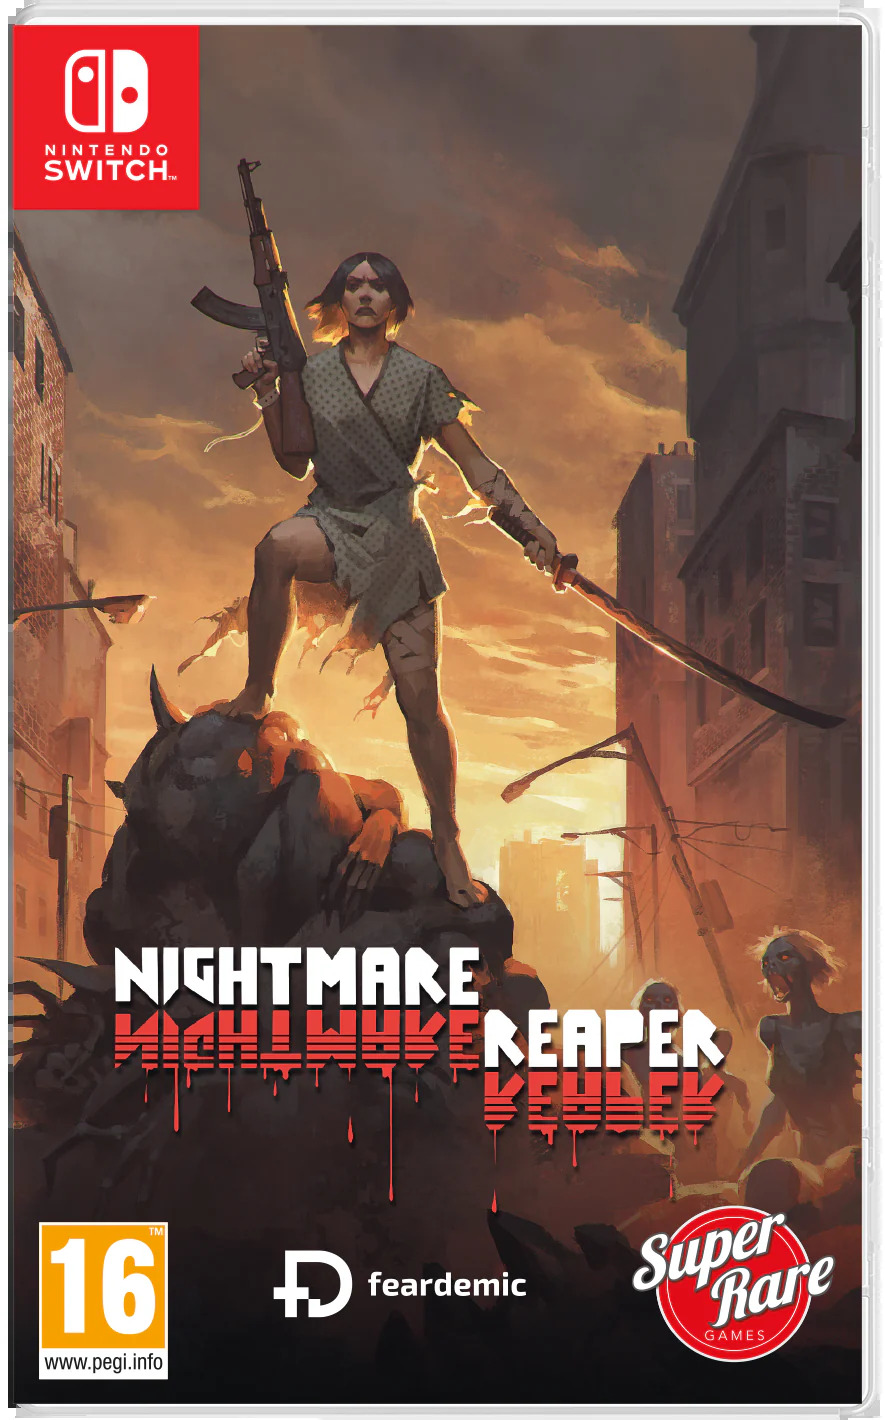 Steam出格好评复古射击游戏《Nightmare Reaper》止将推出NS实体版